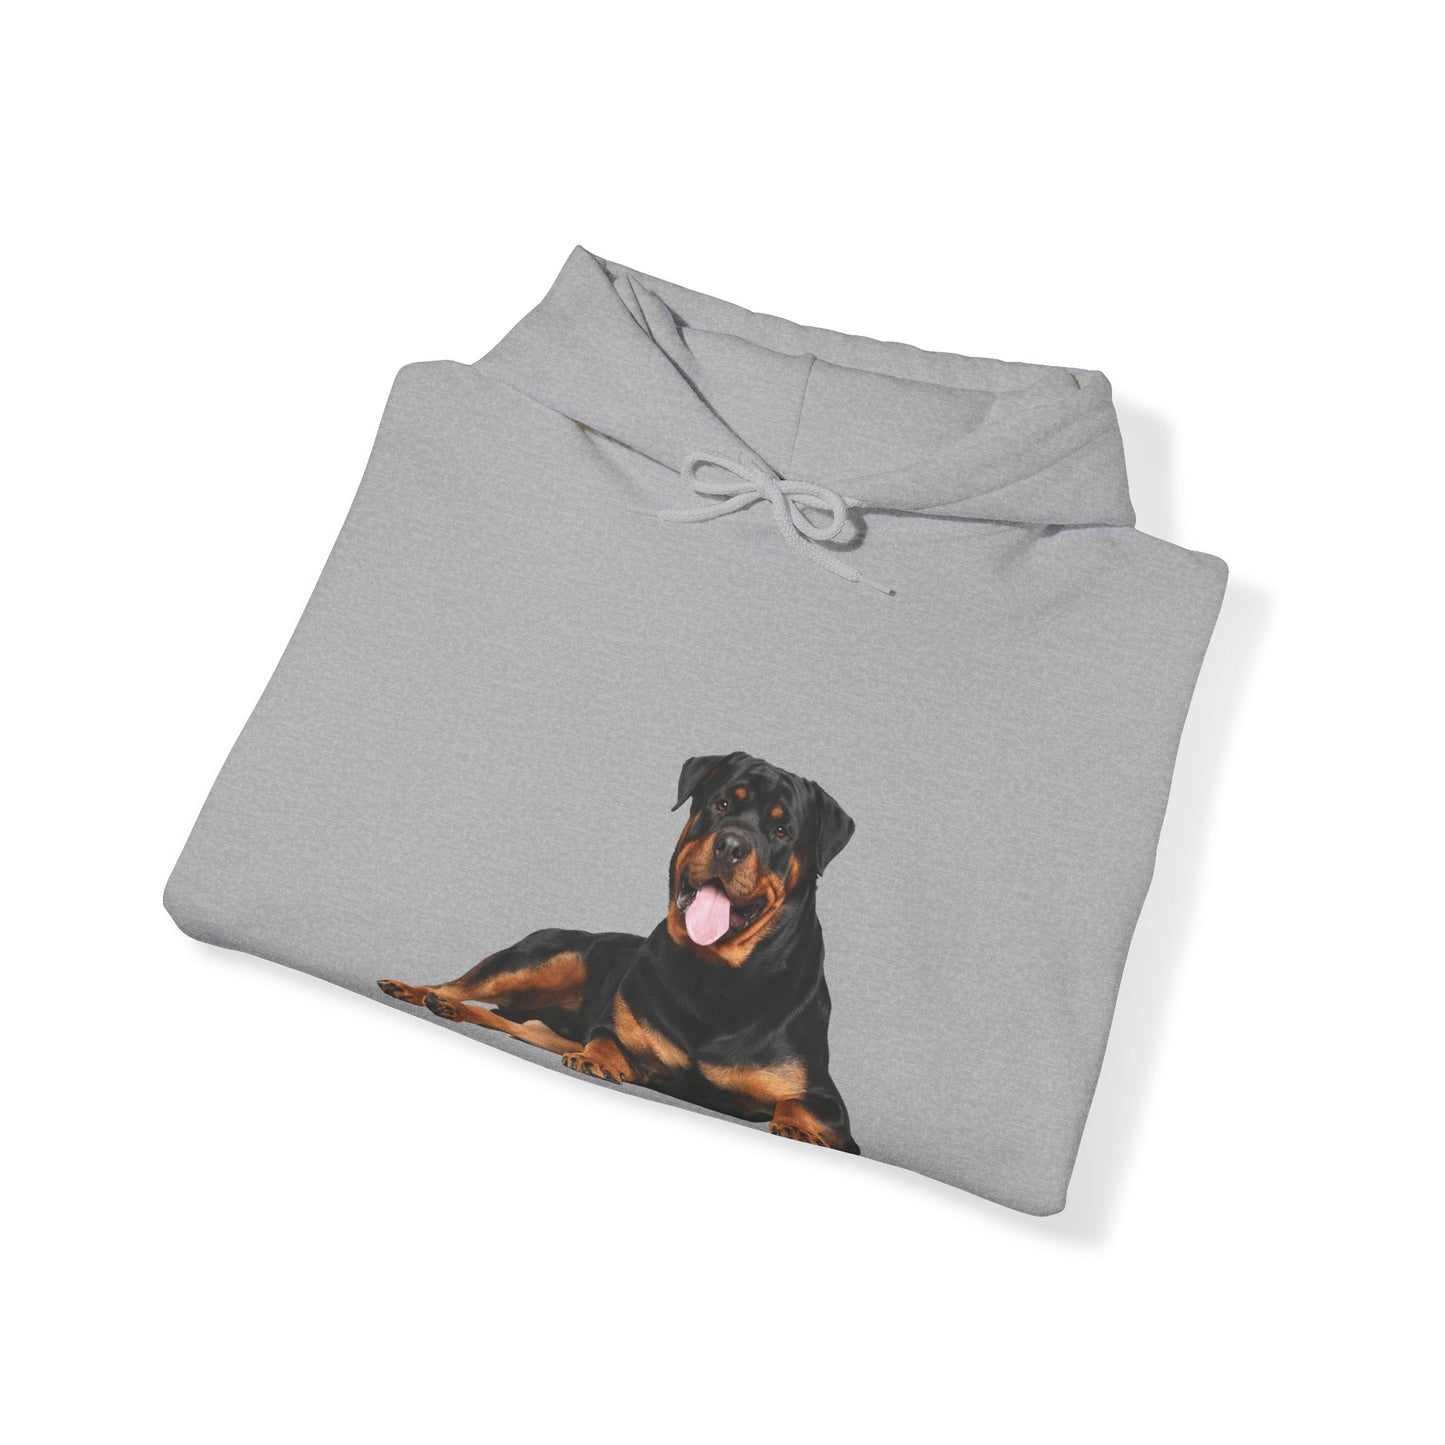 Rottweiler Hooded Sweatshirt